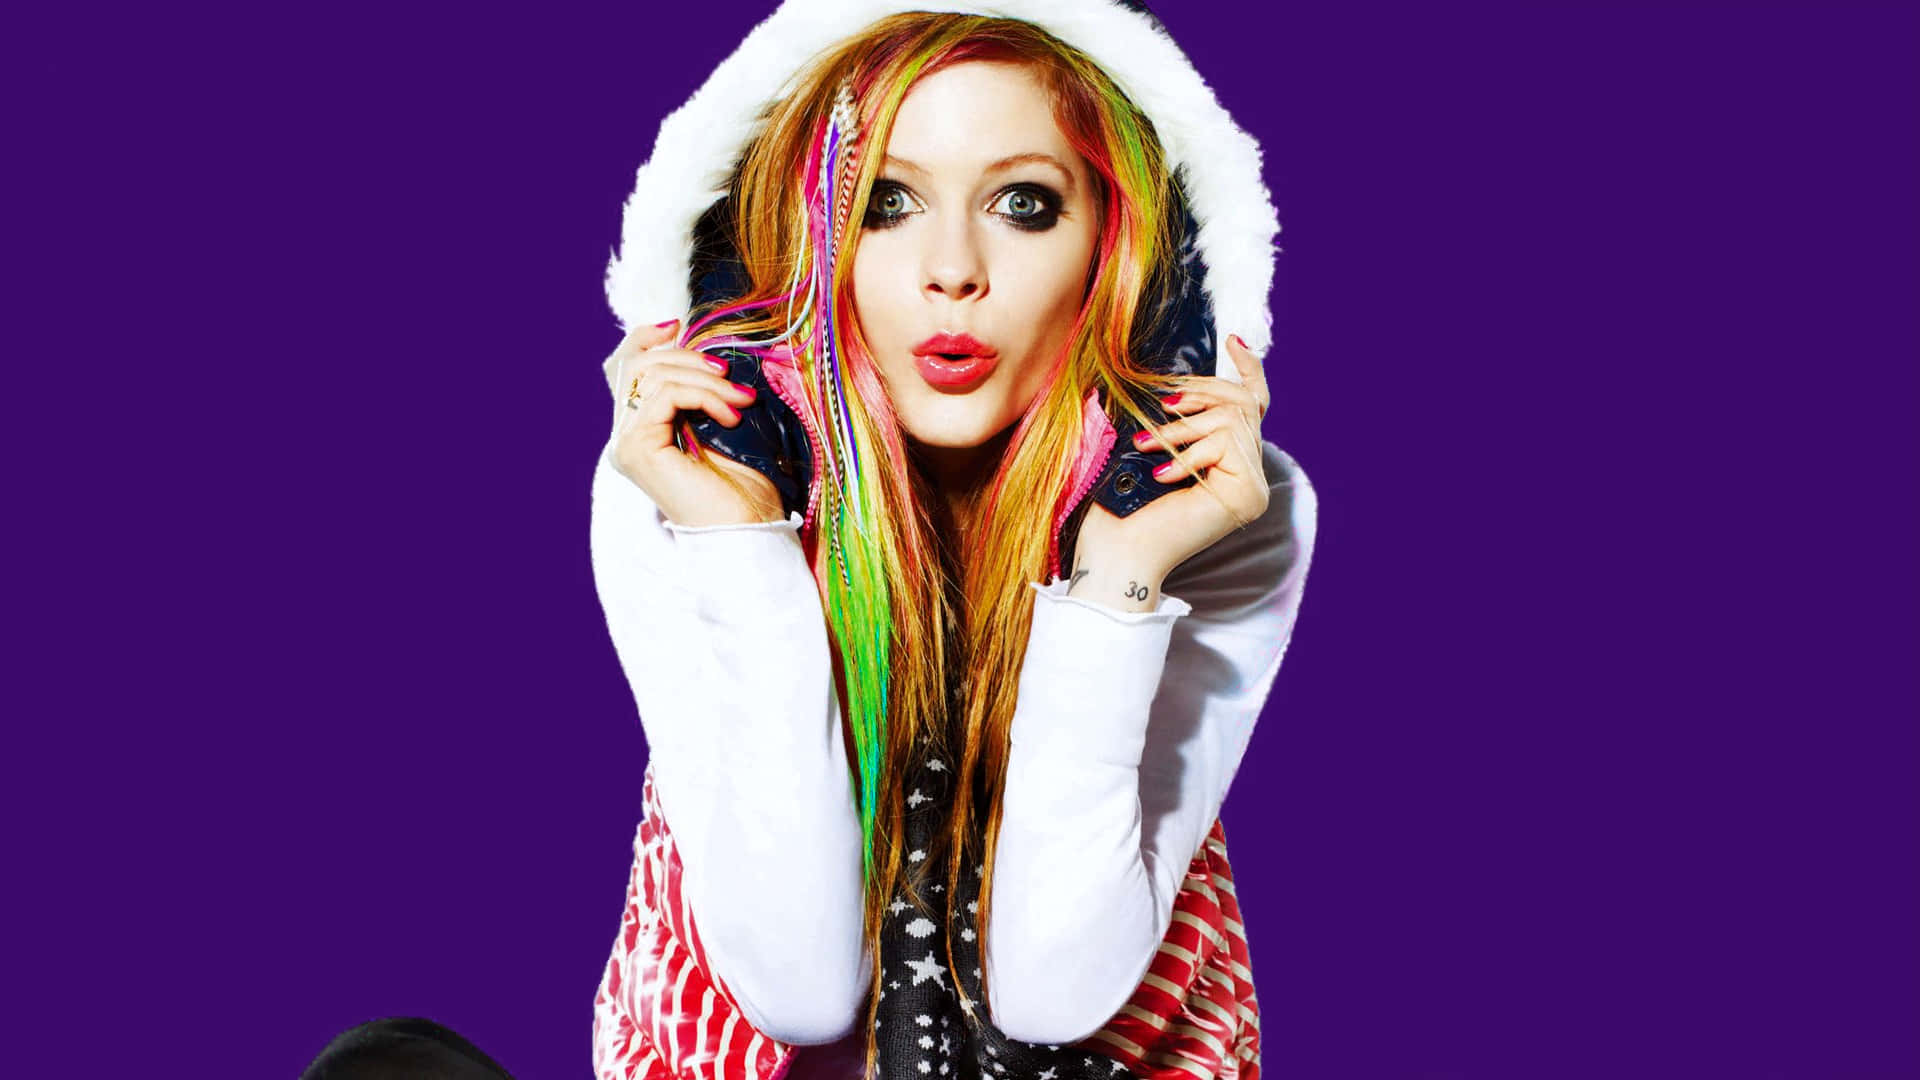 Pop star Avril Lavigne captivates the music world